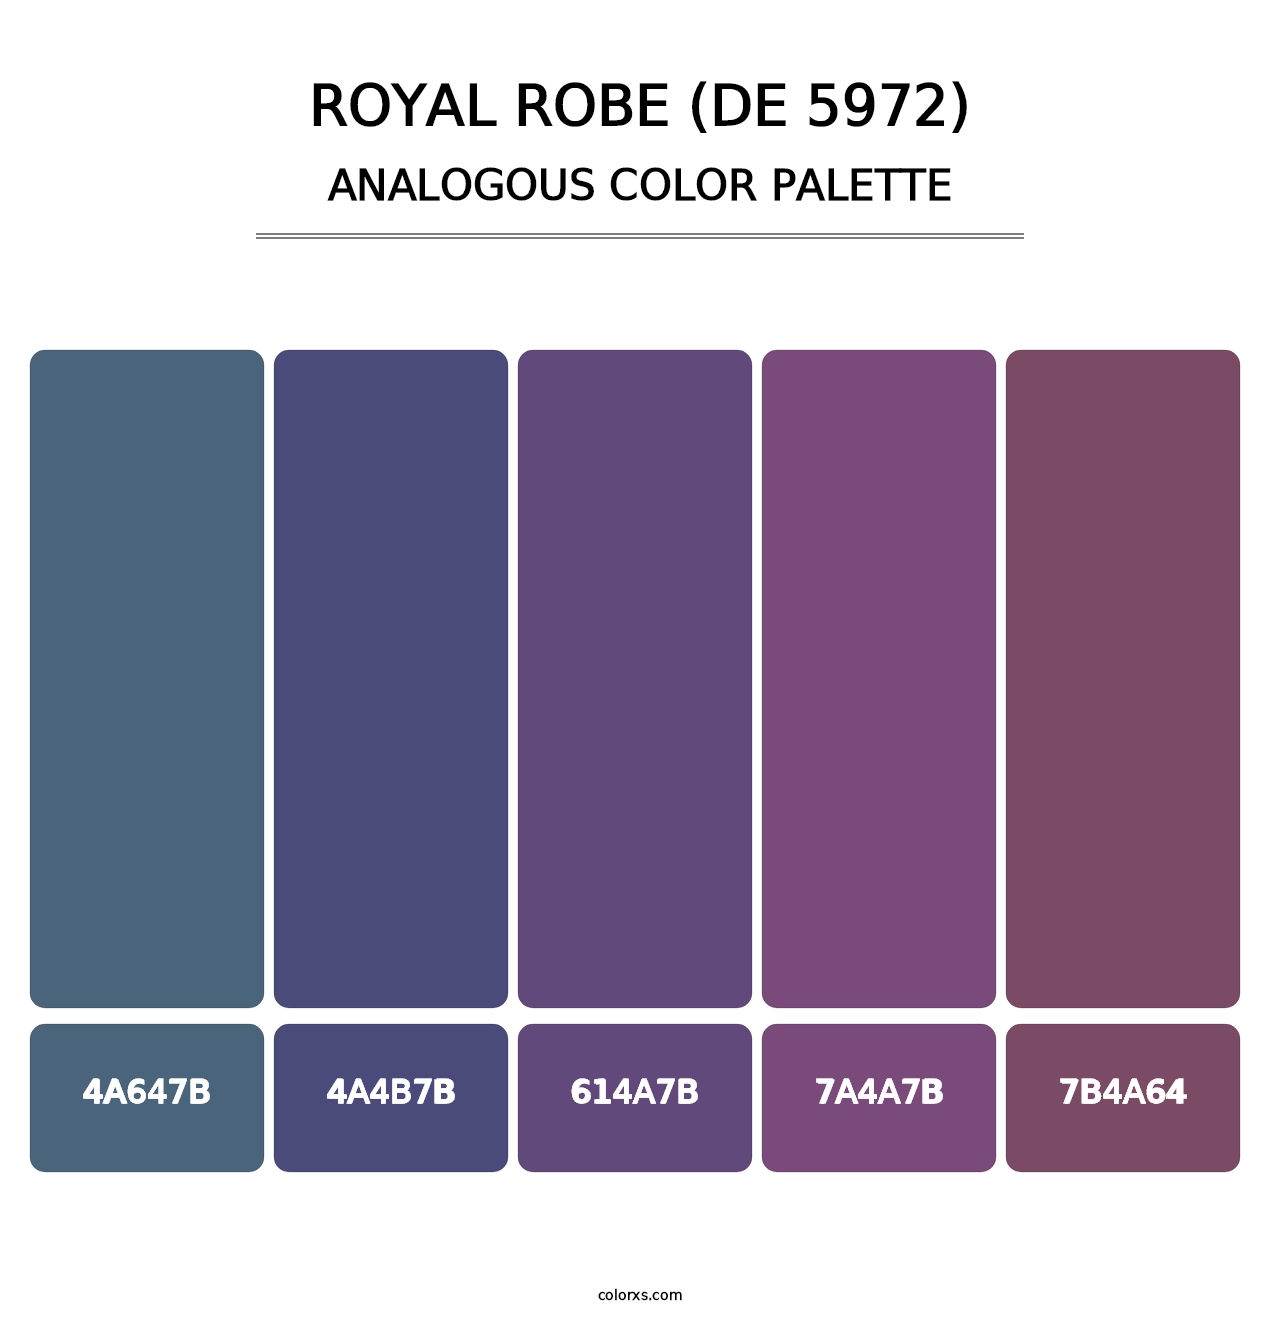 Royal Robe (DE 5972) - Analogous Color Palette